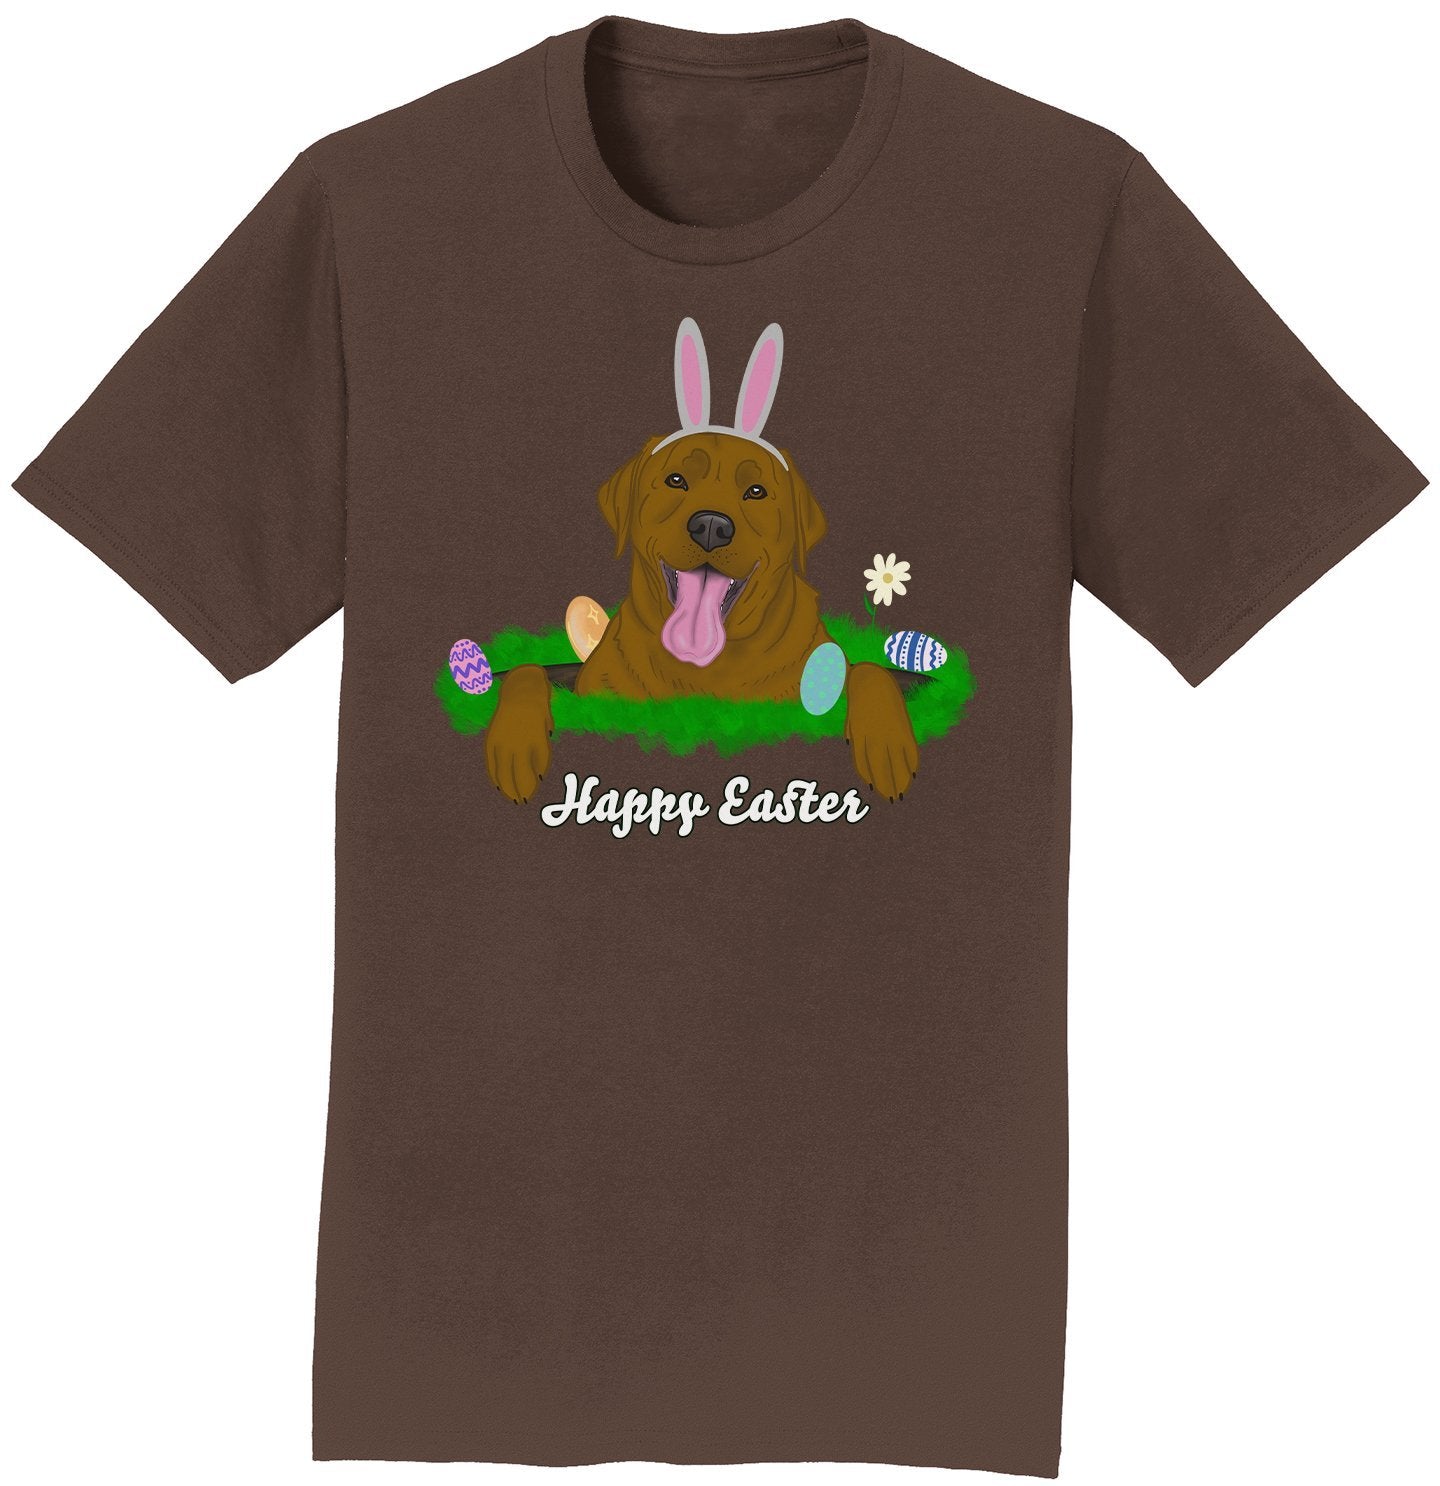 Rabbit Hole Chocolate Labrador  - Adult Unisex T-Shirt